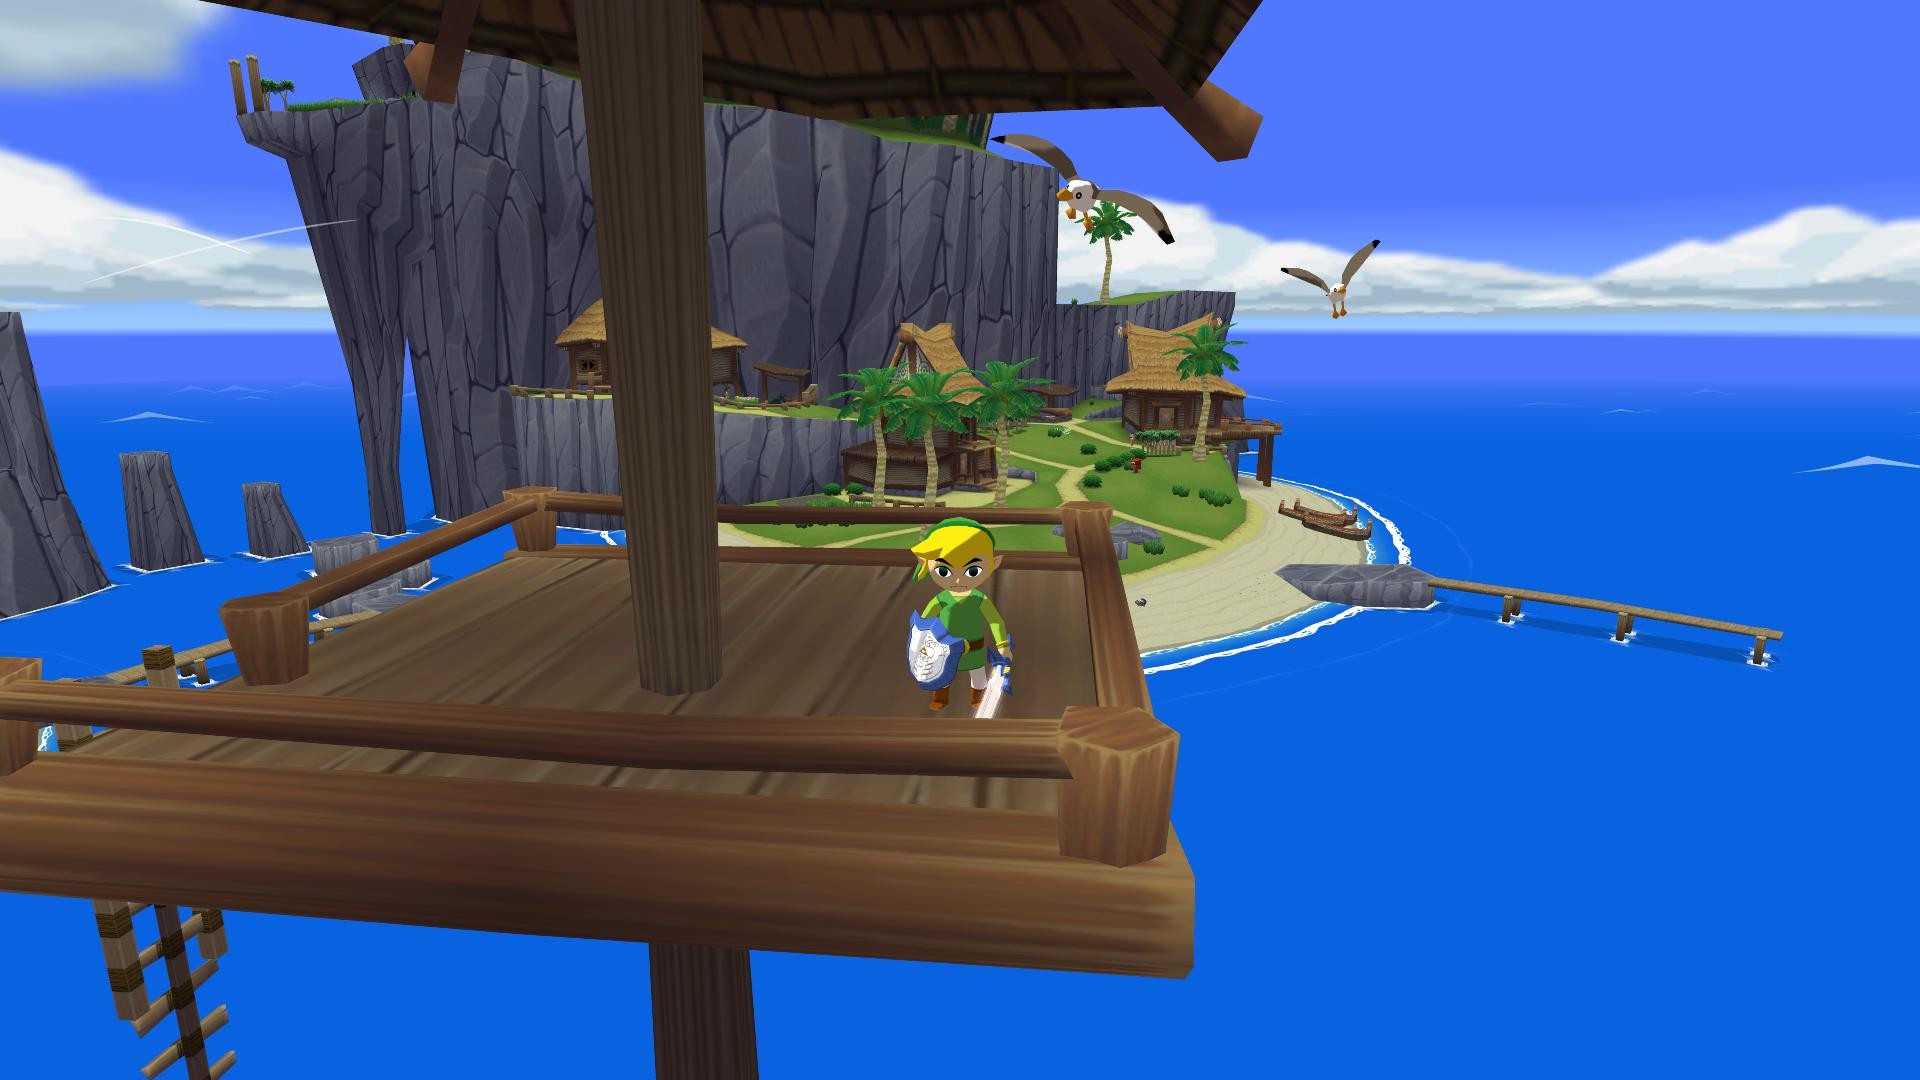 ... Collection Zelda Video Game The Legend Of Zelda: The Wind Waker 268721